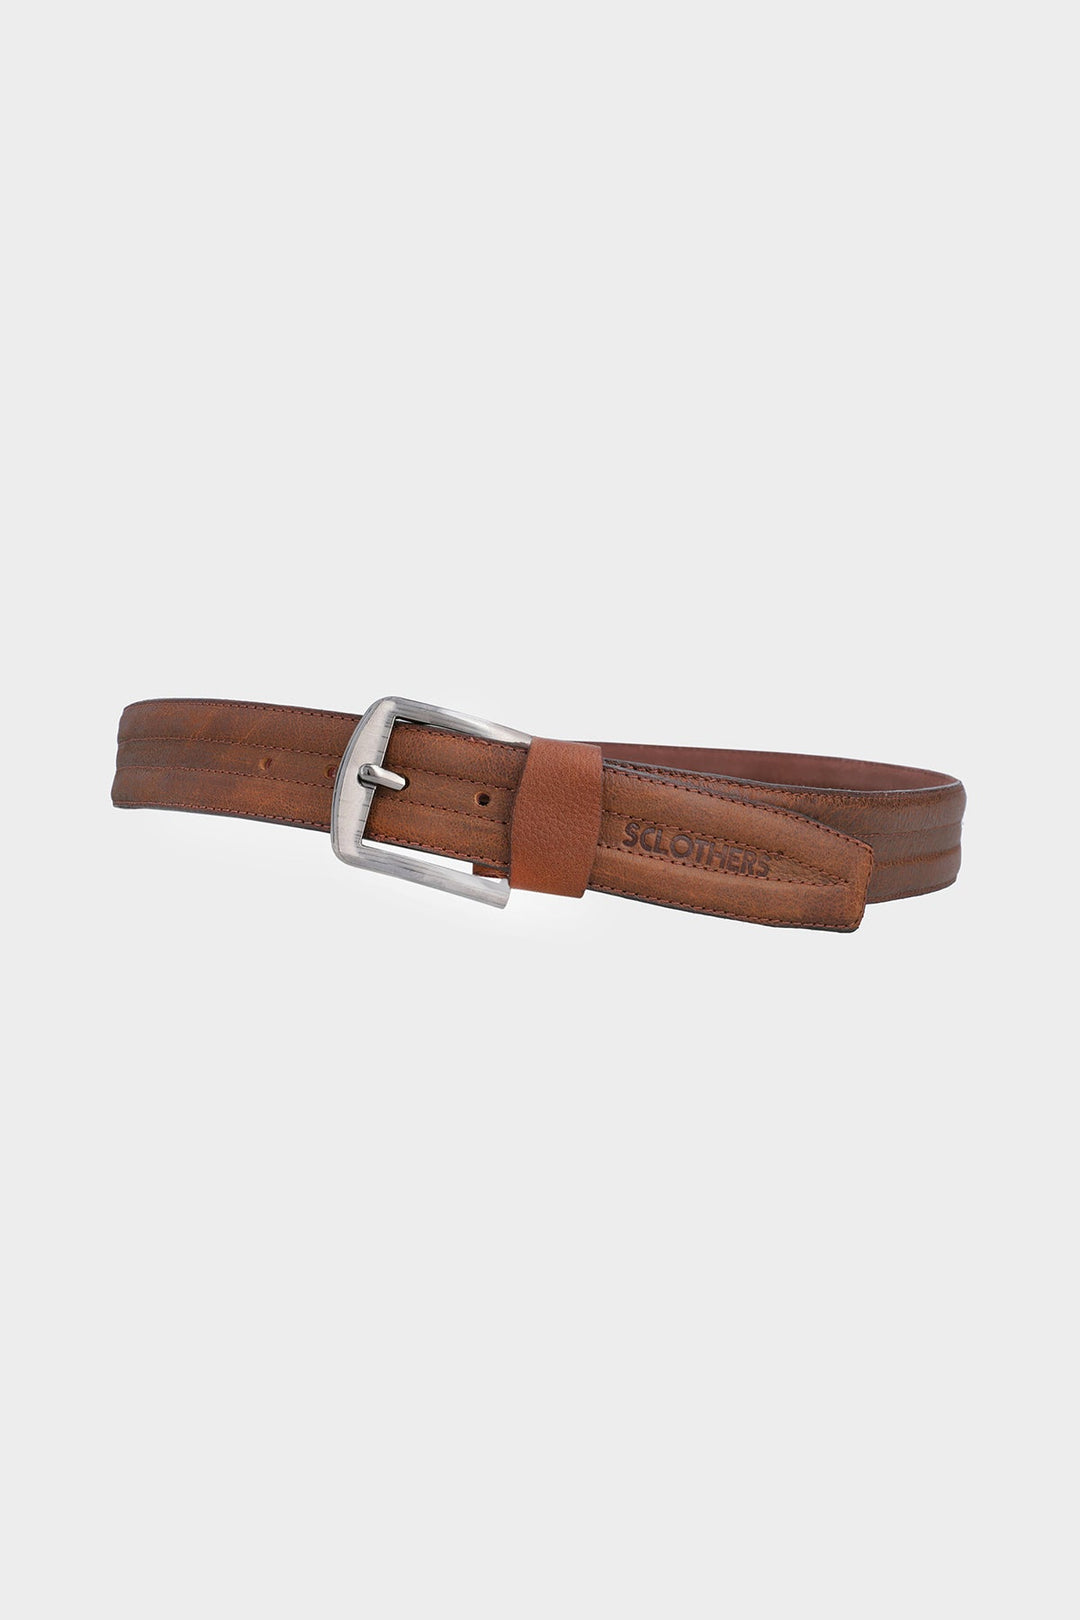 Textured Brown Belt - W21 - MB0007R